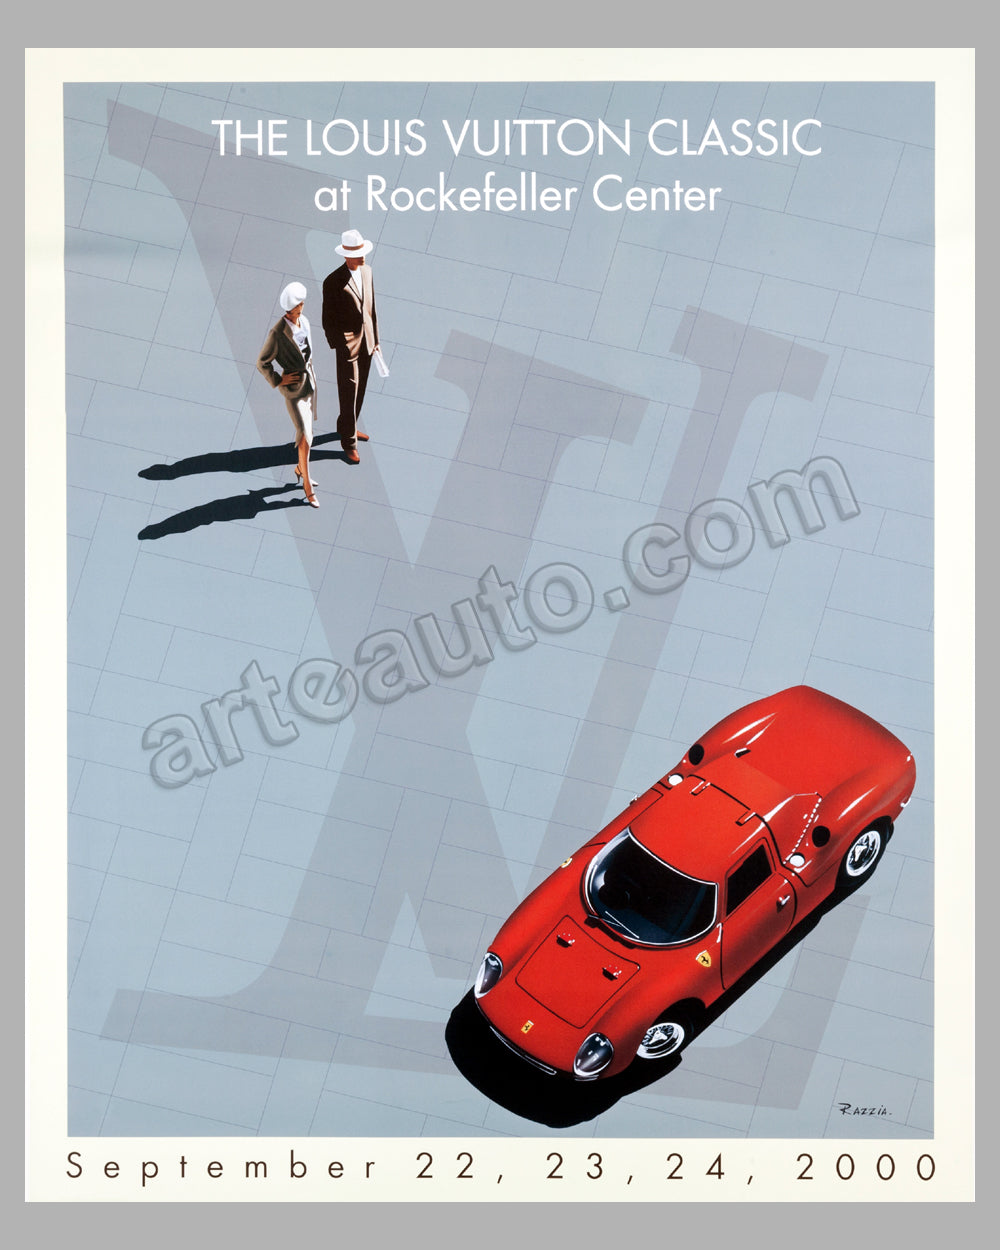 Louis Vuitton Italia Classica Toscan Rally 1995 large poster by Razzia -  l'art et l'automobile